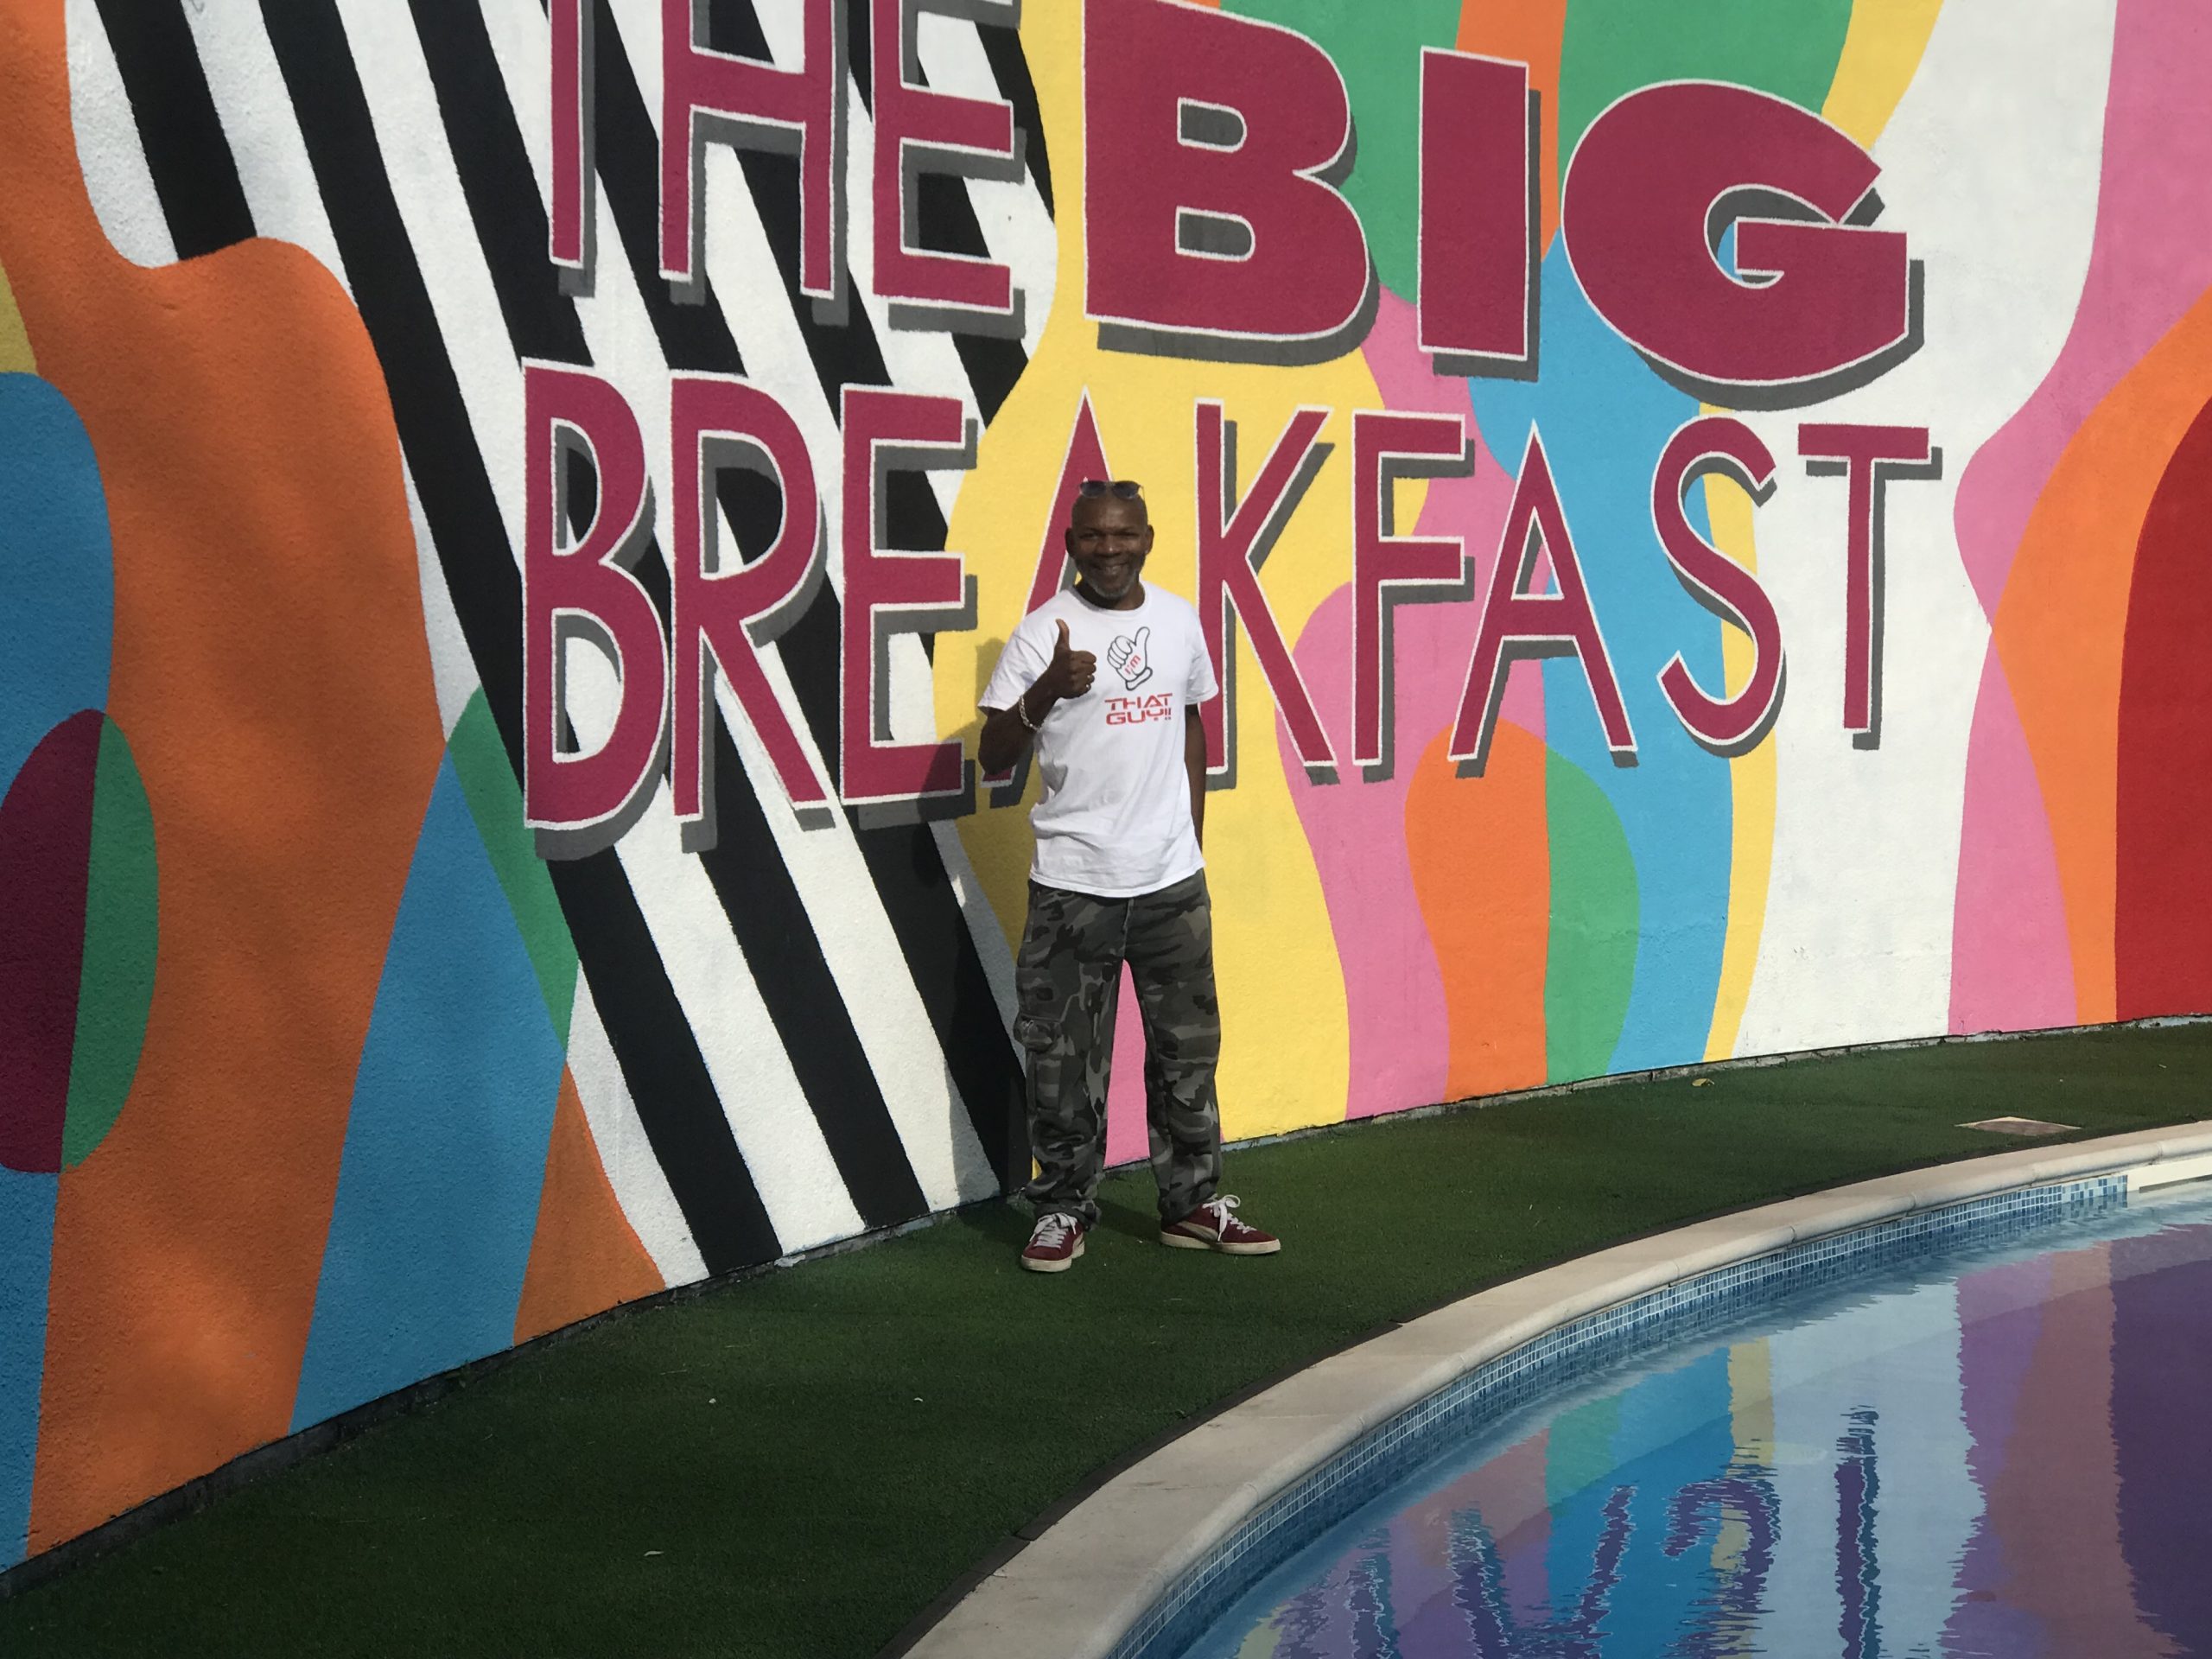 The Big Breakfast House